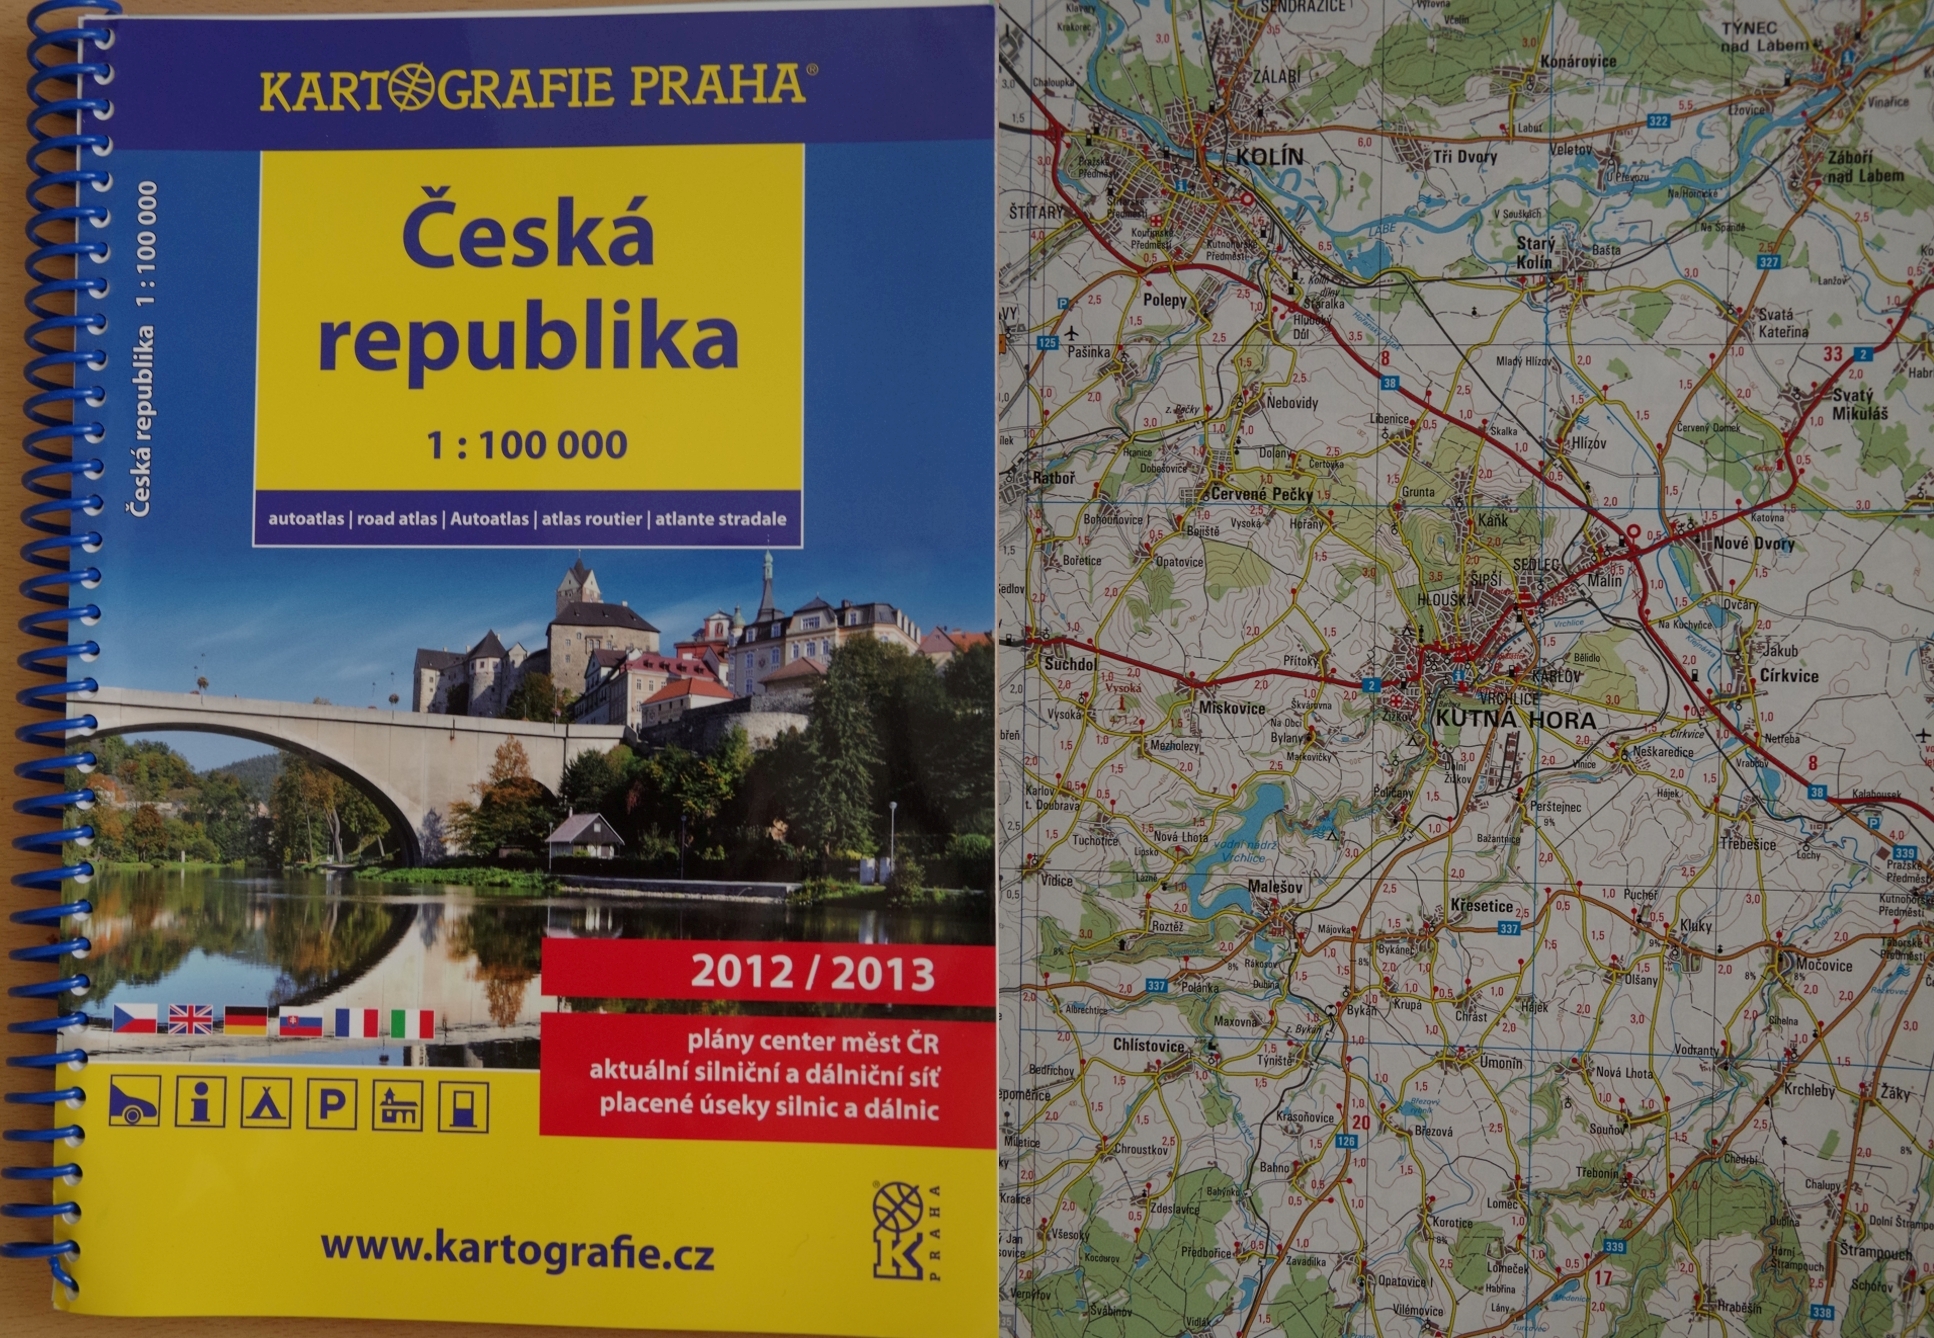 Česká republika ‒ autoatlas 1 : 100 000 – Kartografie PRAHA, a. s.